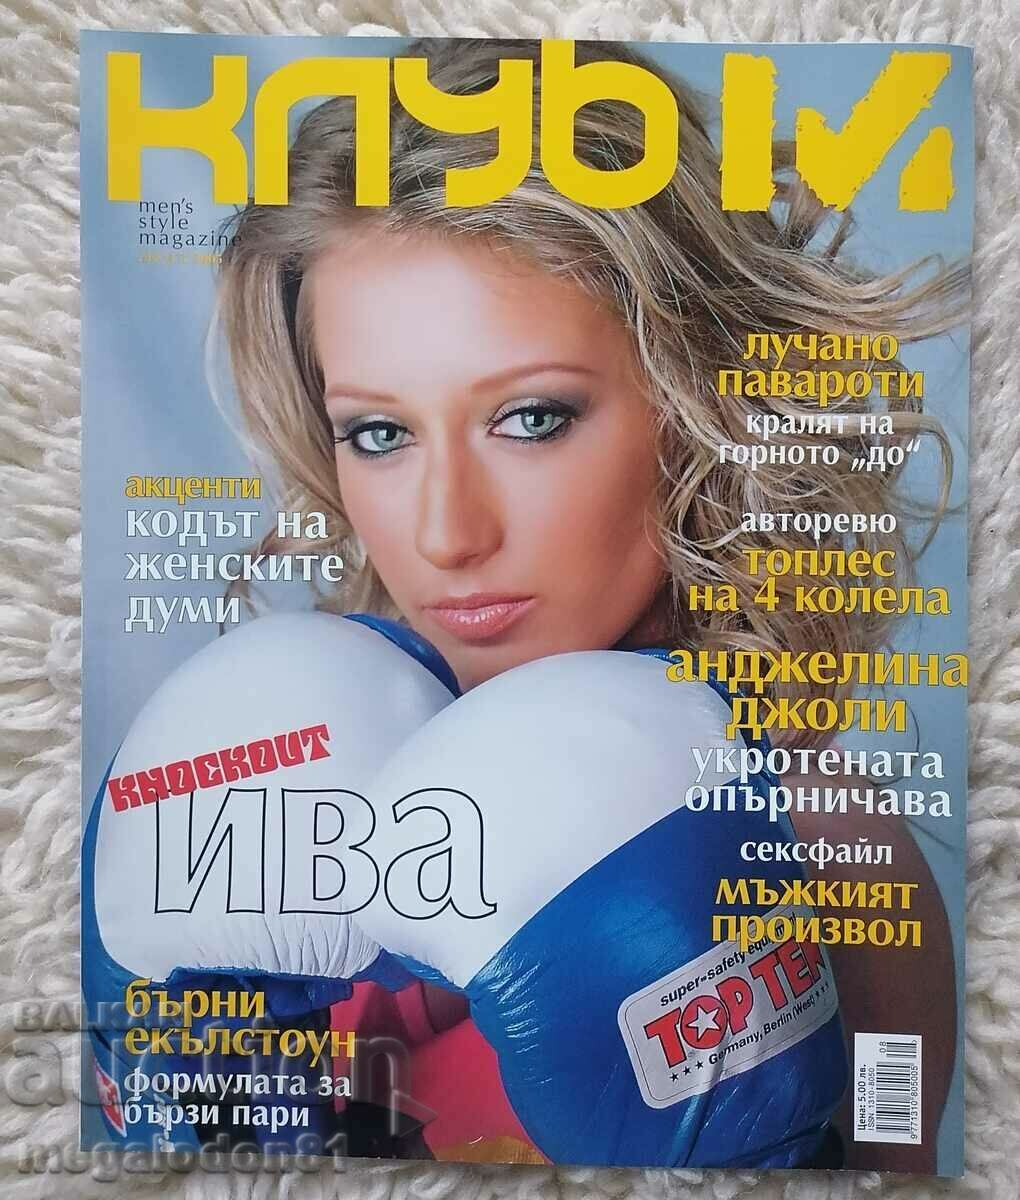 Revista Club M, august 2005.